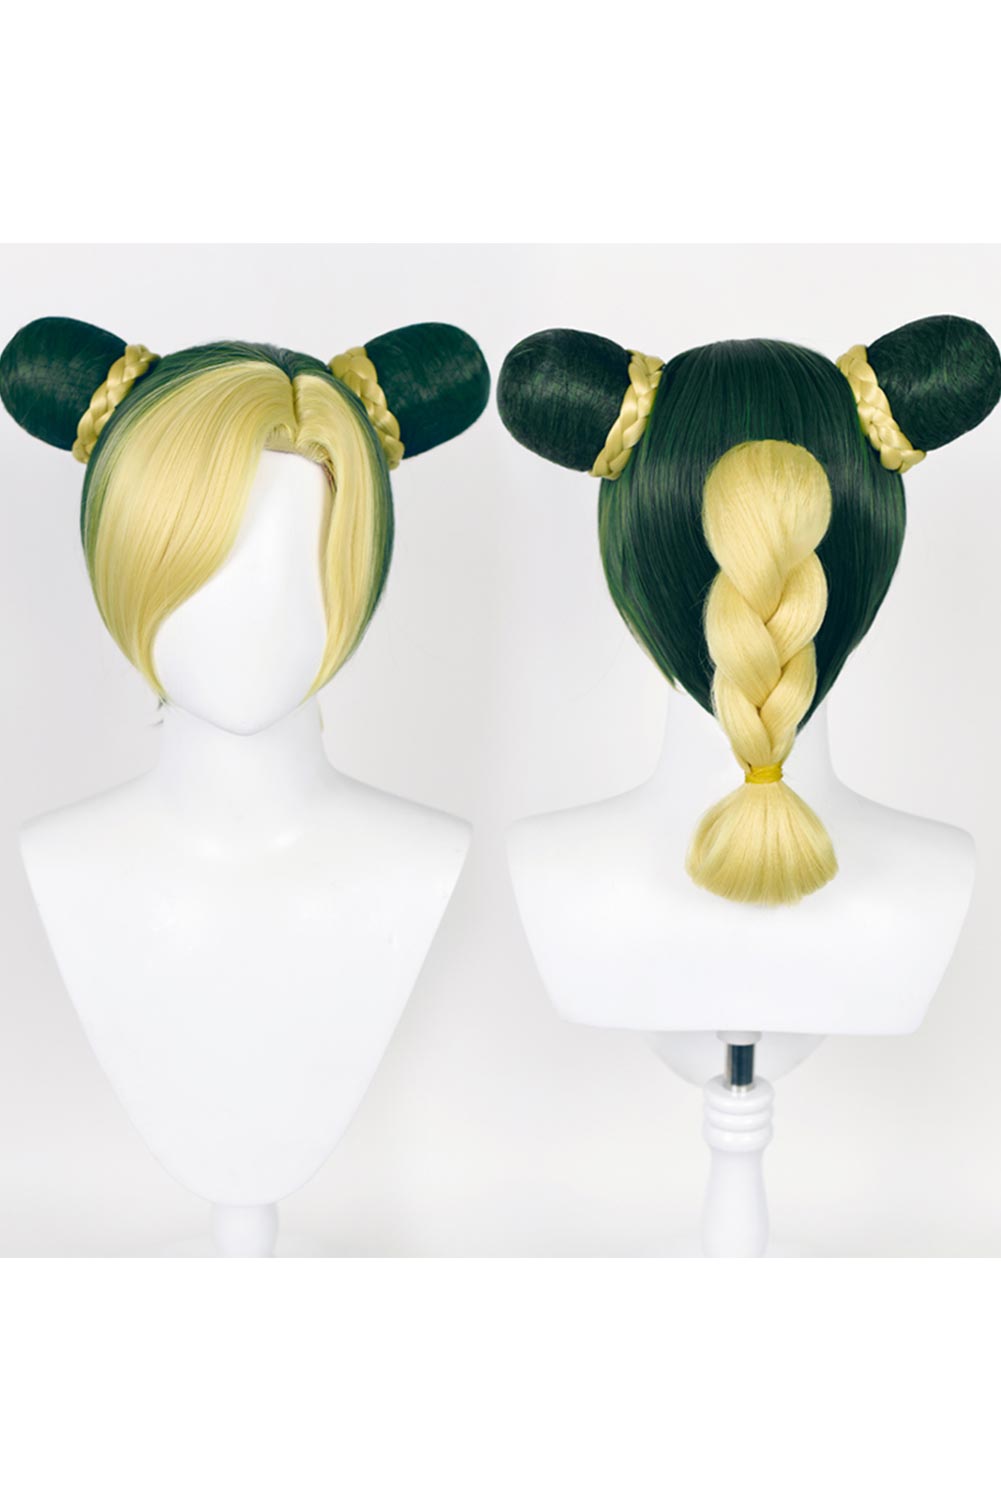 Anime JoJo's Bizarre Adventure Jolyne Cujoh Cosplay Wig Heat Resistant Synthetic Hair Halloween Costume Accessories